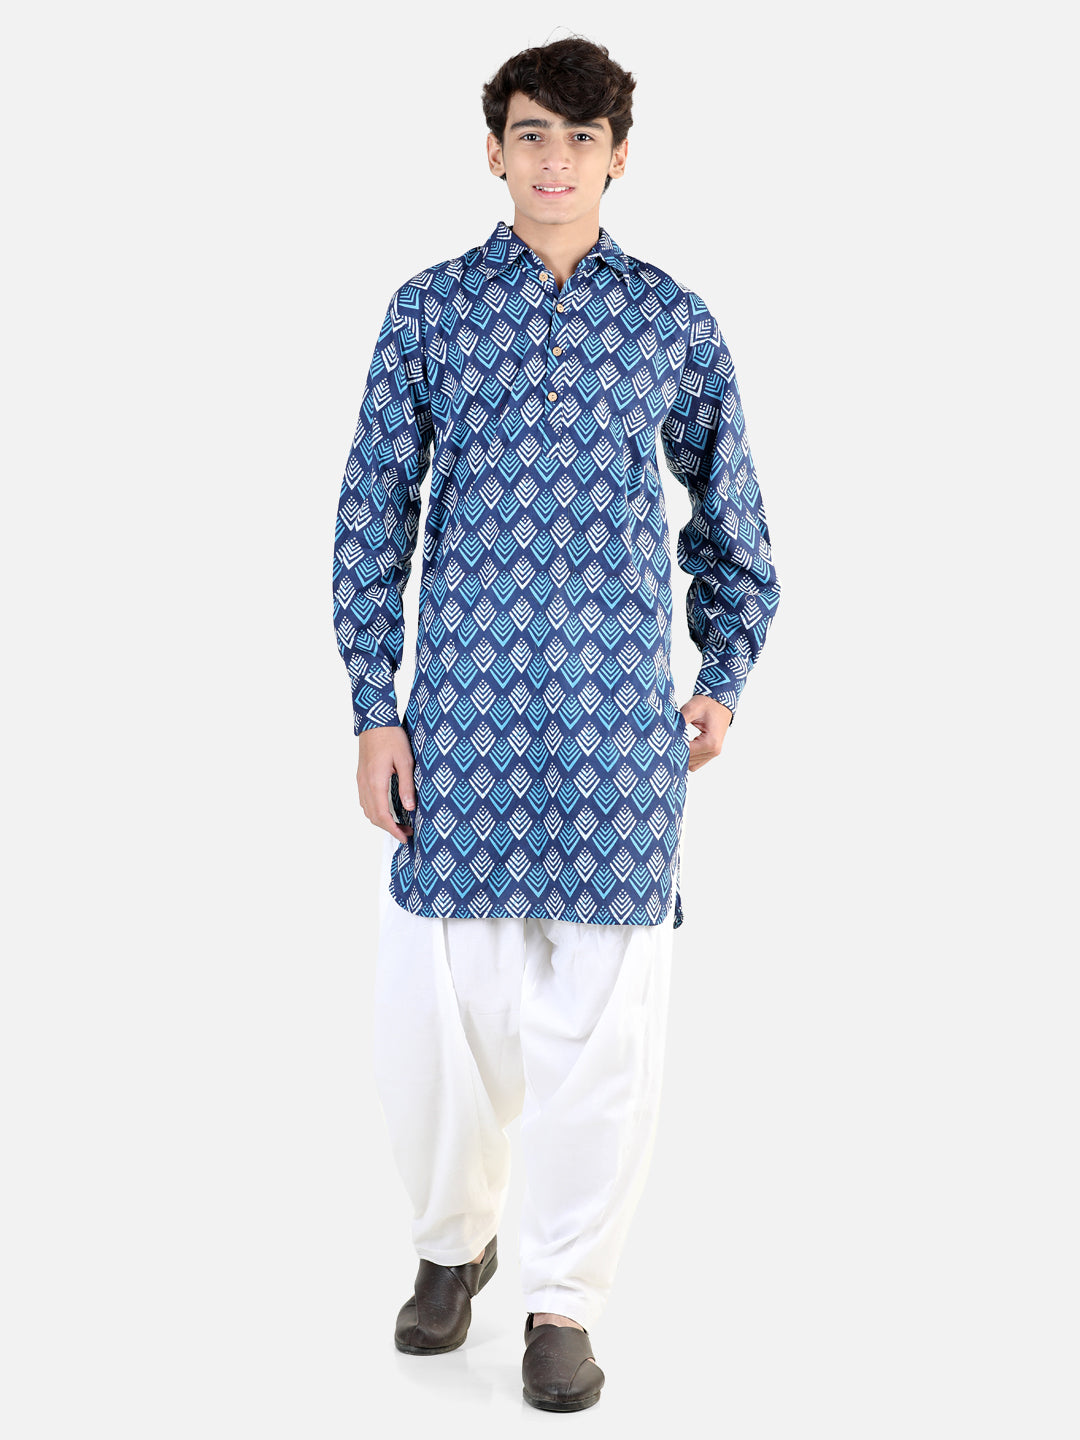 BownBee Sibling sets Pure Cotton Printed Lehenga Choli Dupatta and Kurta Pajama Set for Girls- Blue